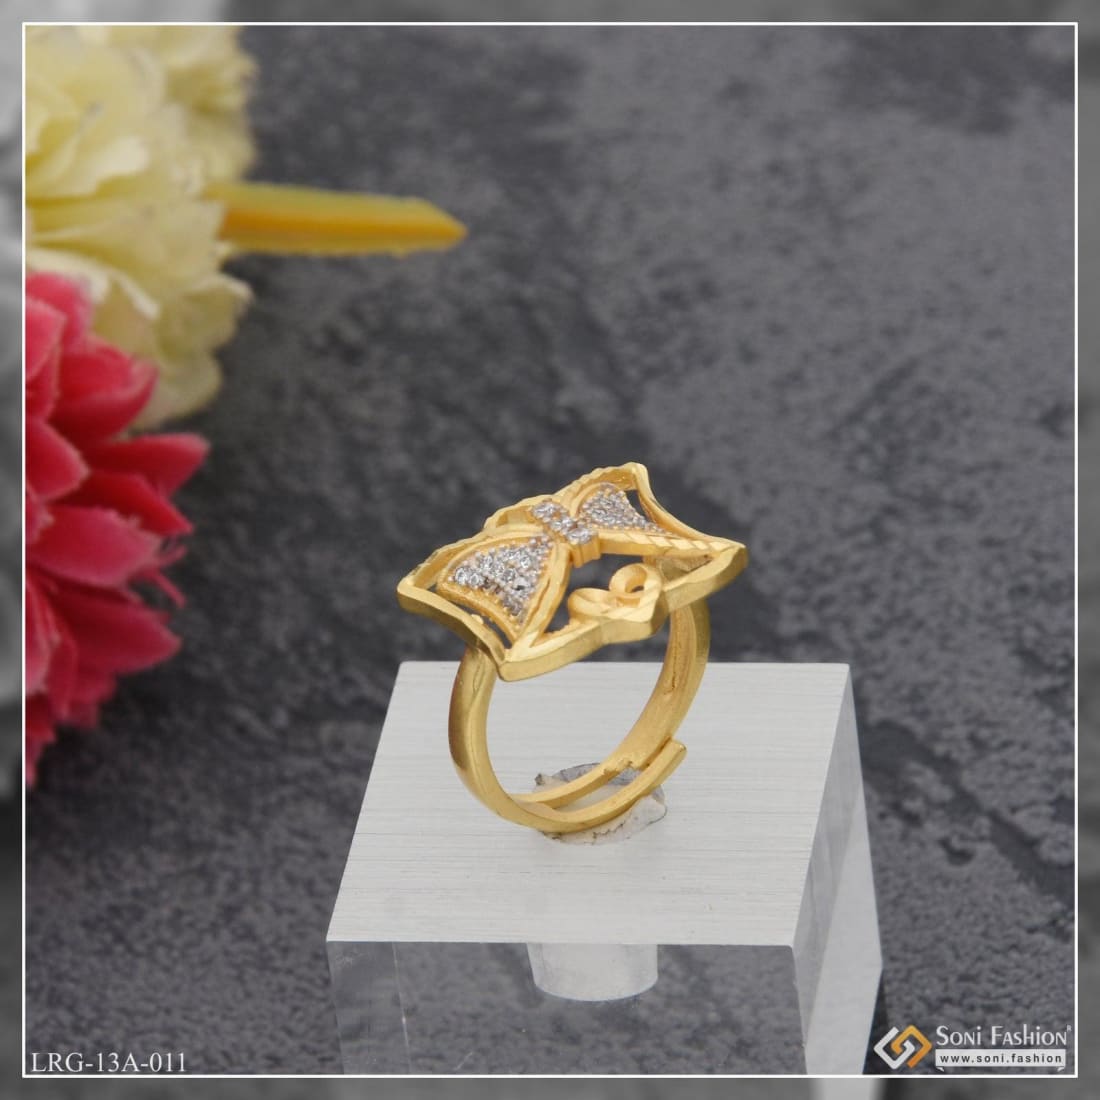 Buy Joyalukkas 22k Gold Ring For Kids Online At Best Price @ Tata CLiQ